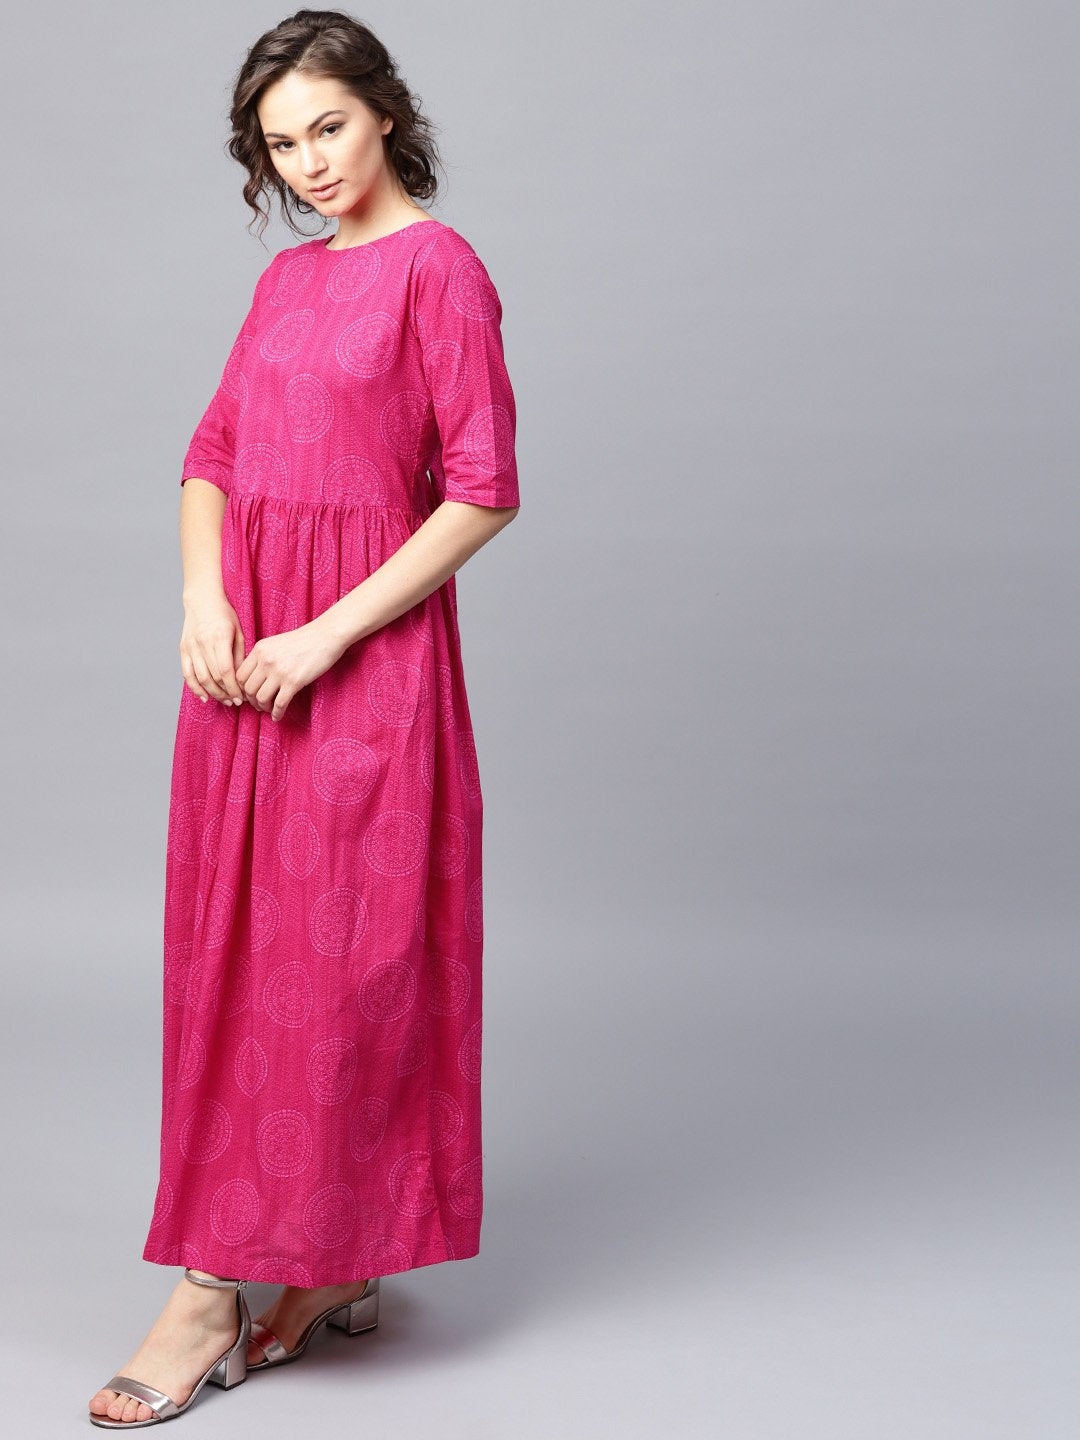 Women's Pink Printed Half Sleeve Cotton Flared Maxi Dress - Nayo Clothing